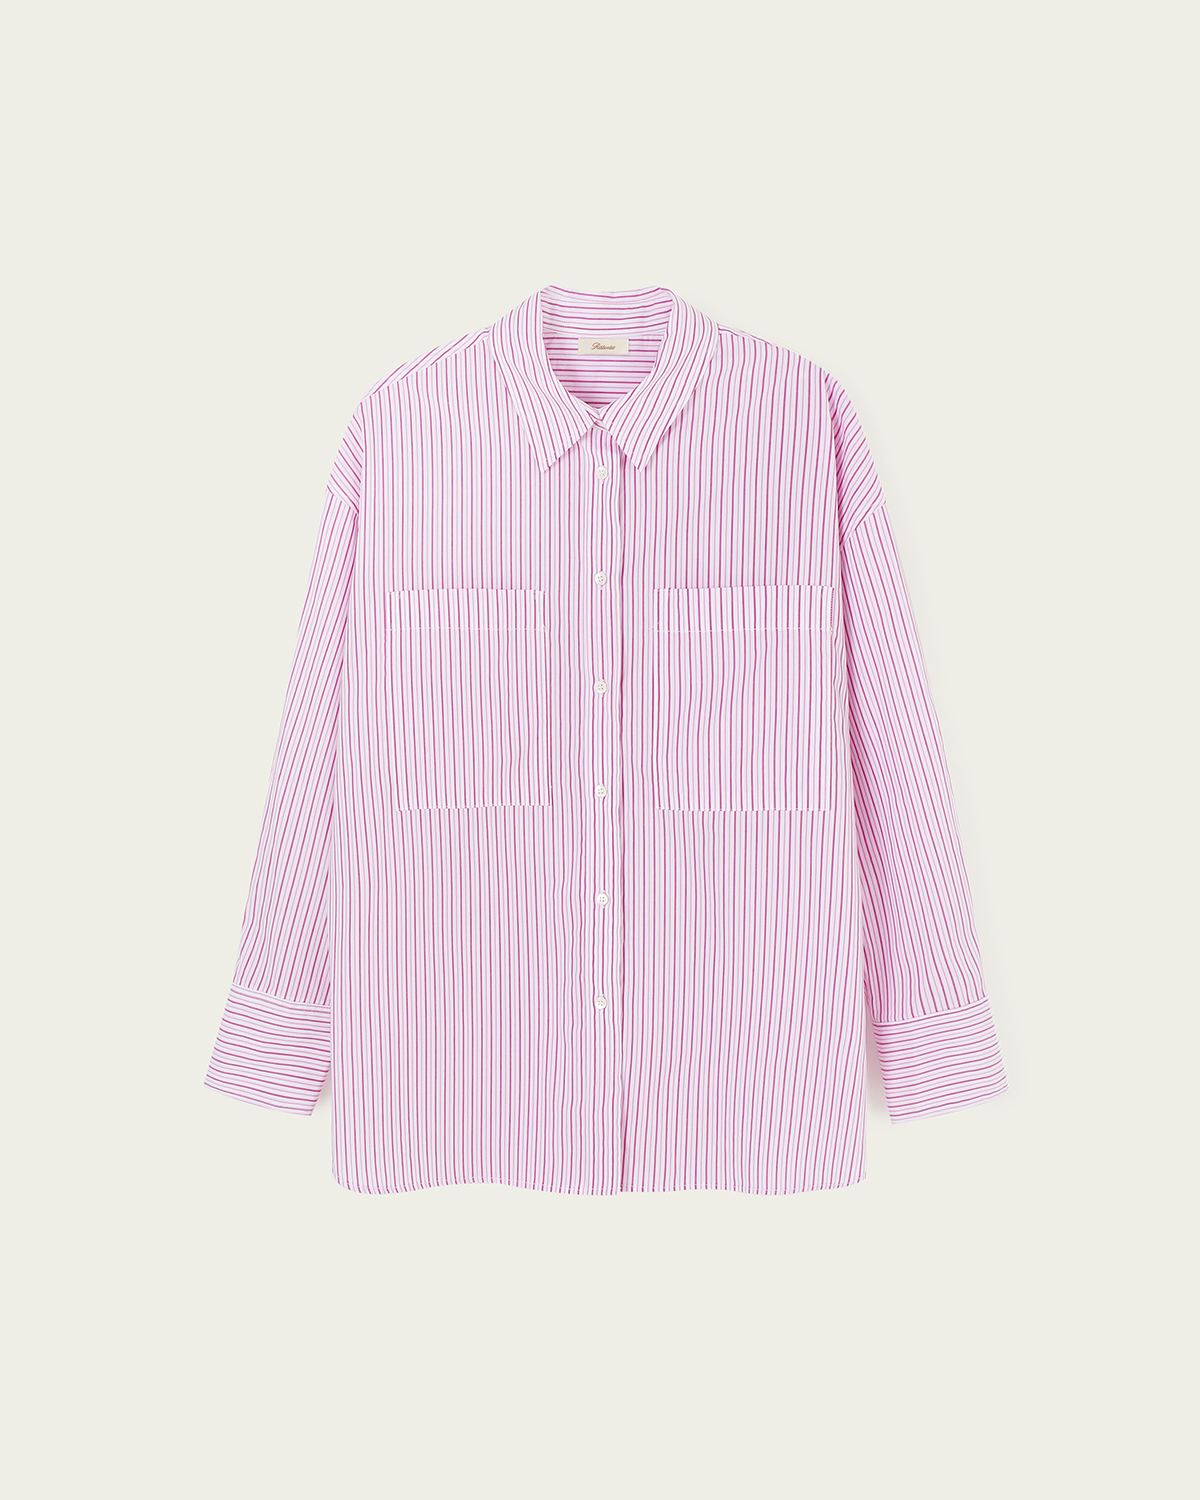 Dete Stripe Shirt - Pink